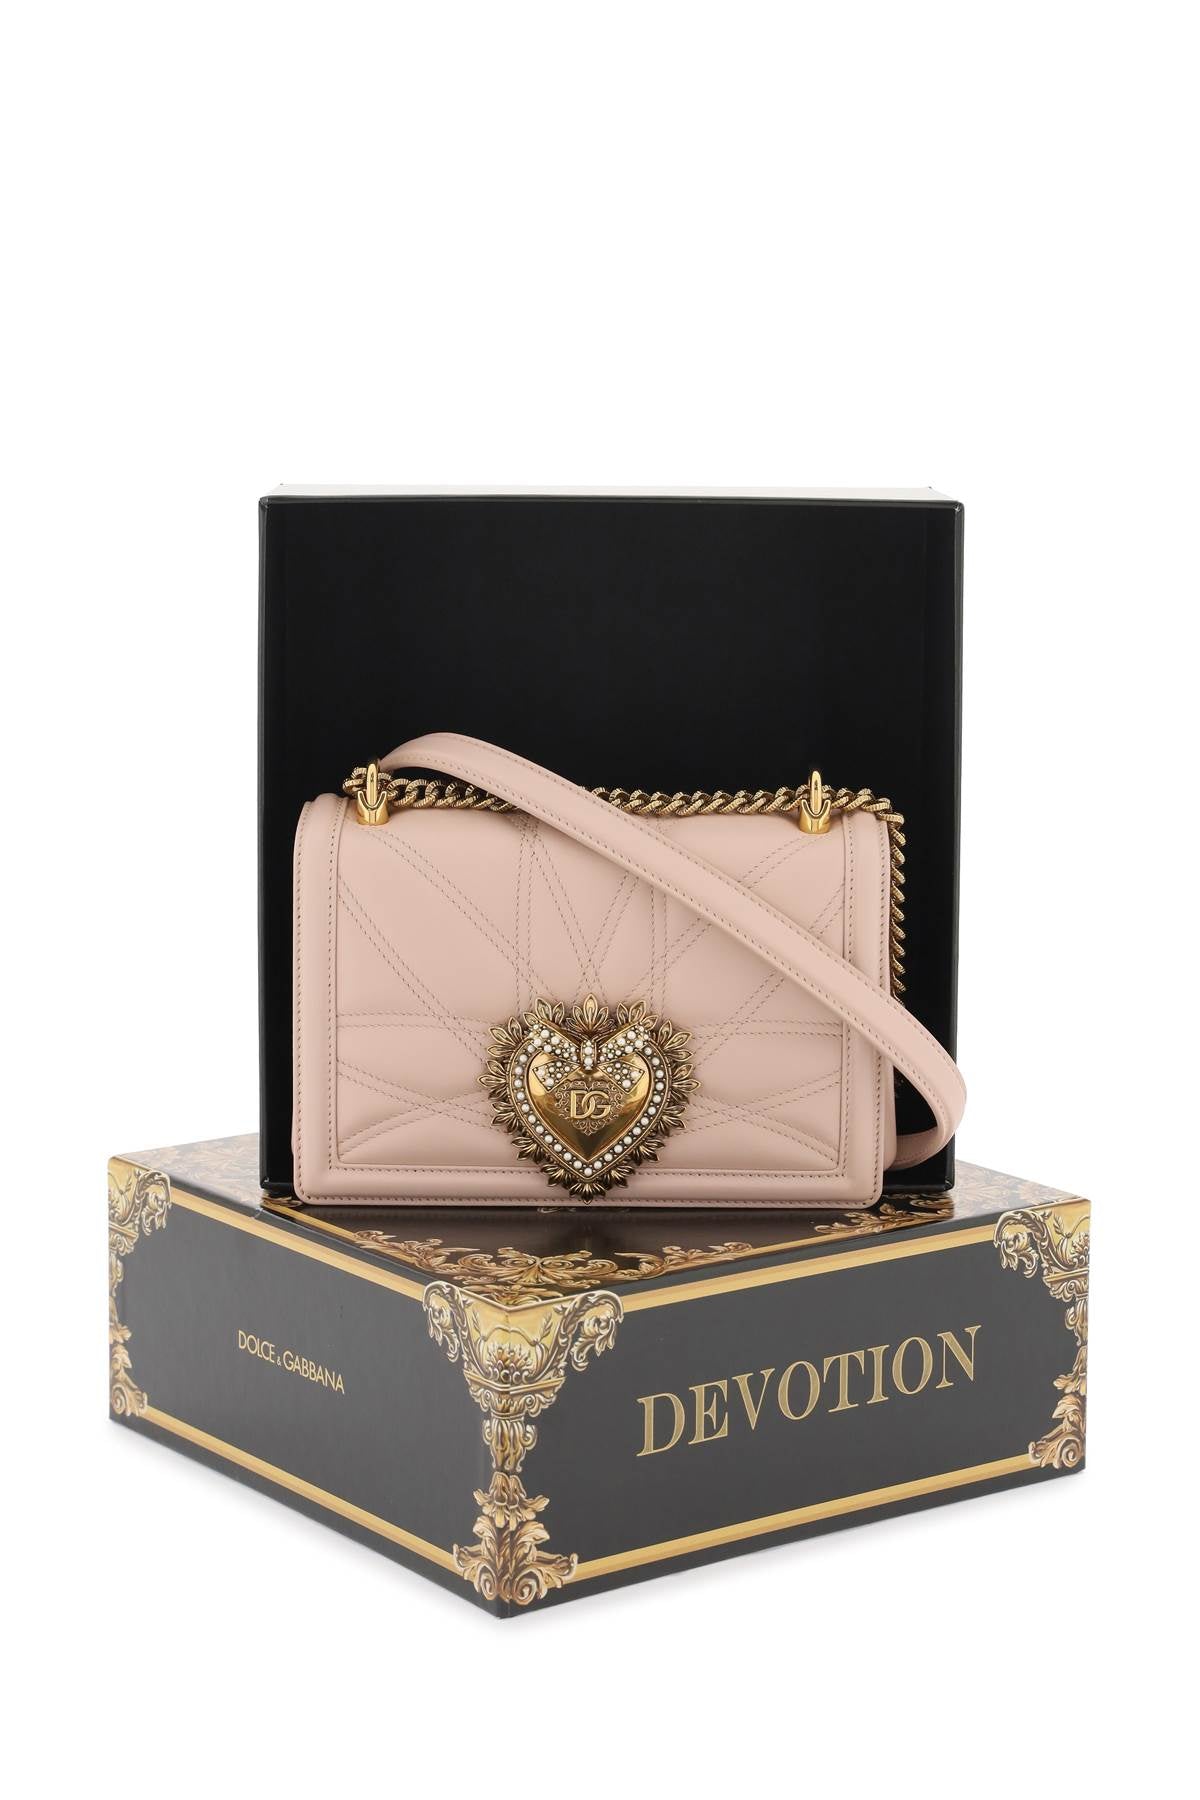 Dolce & Gabbana Devotion Medium Bag   Pink